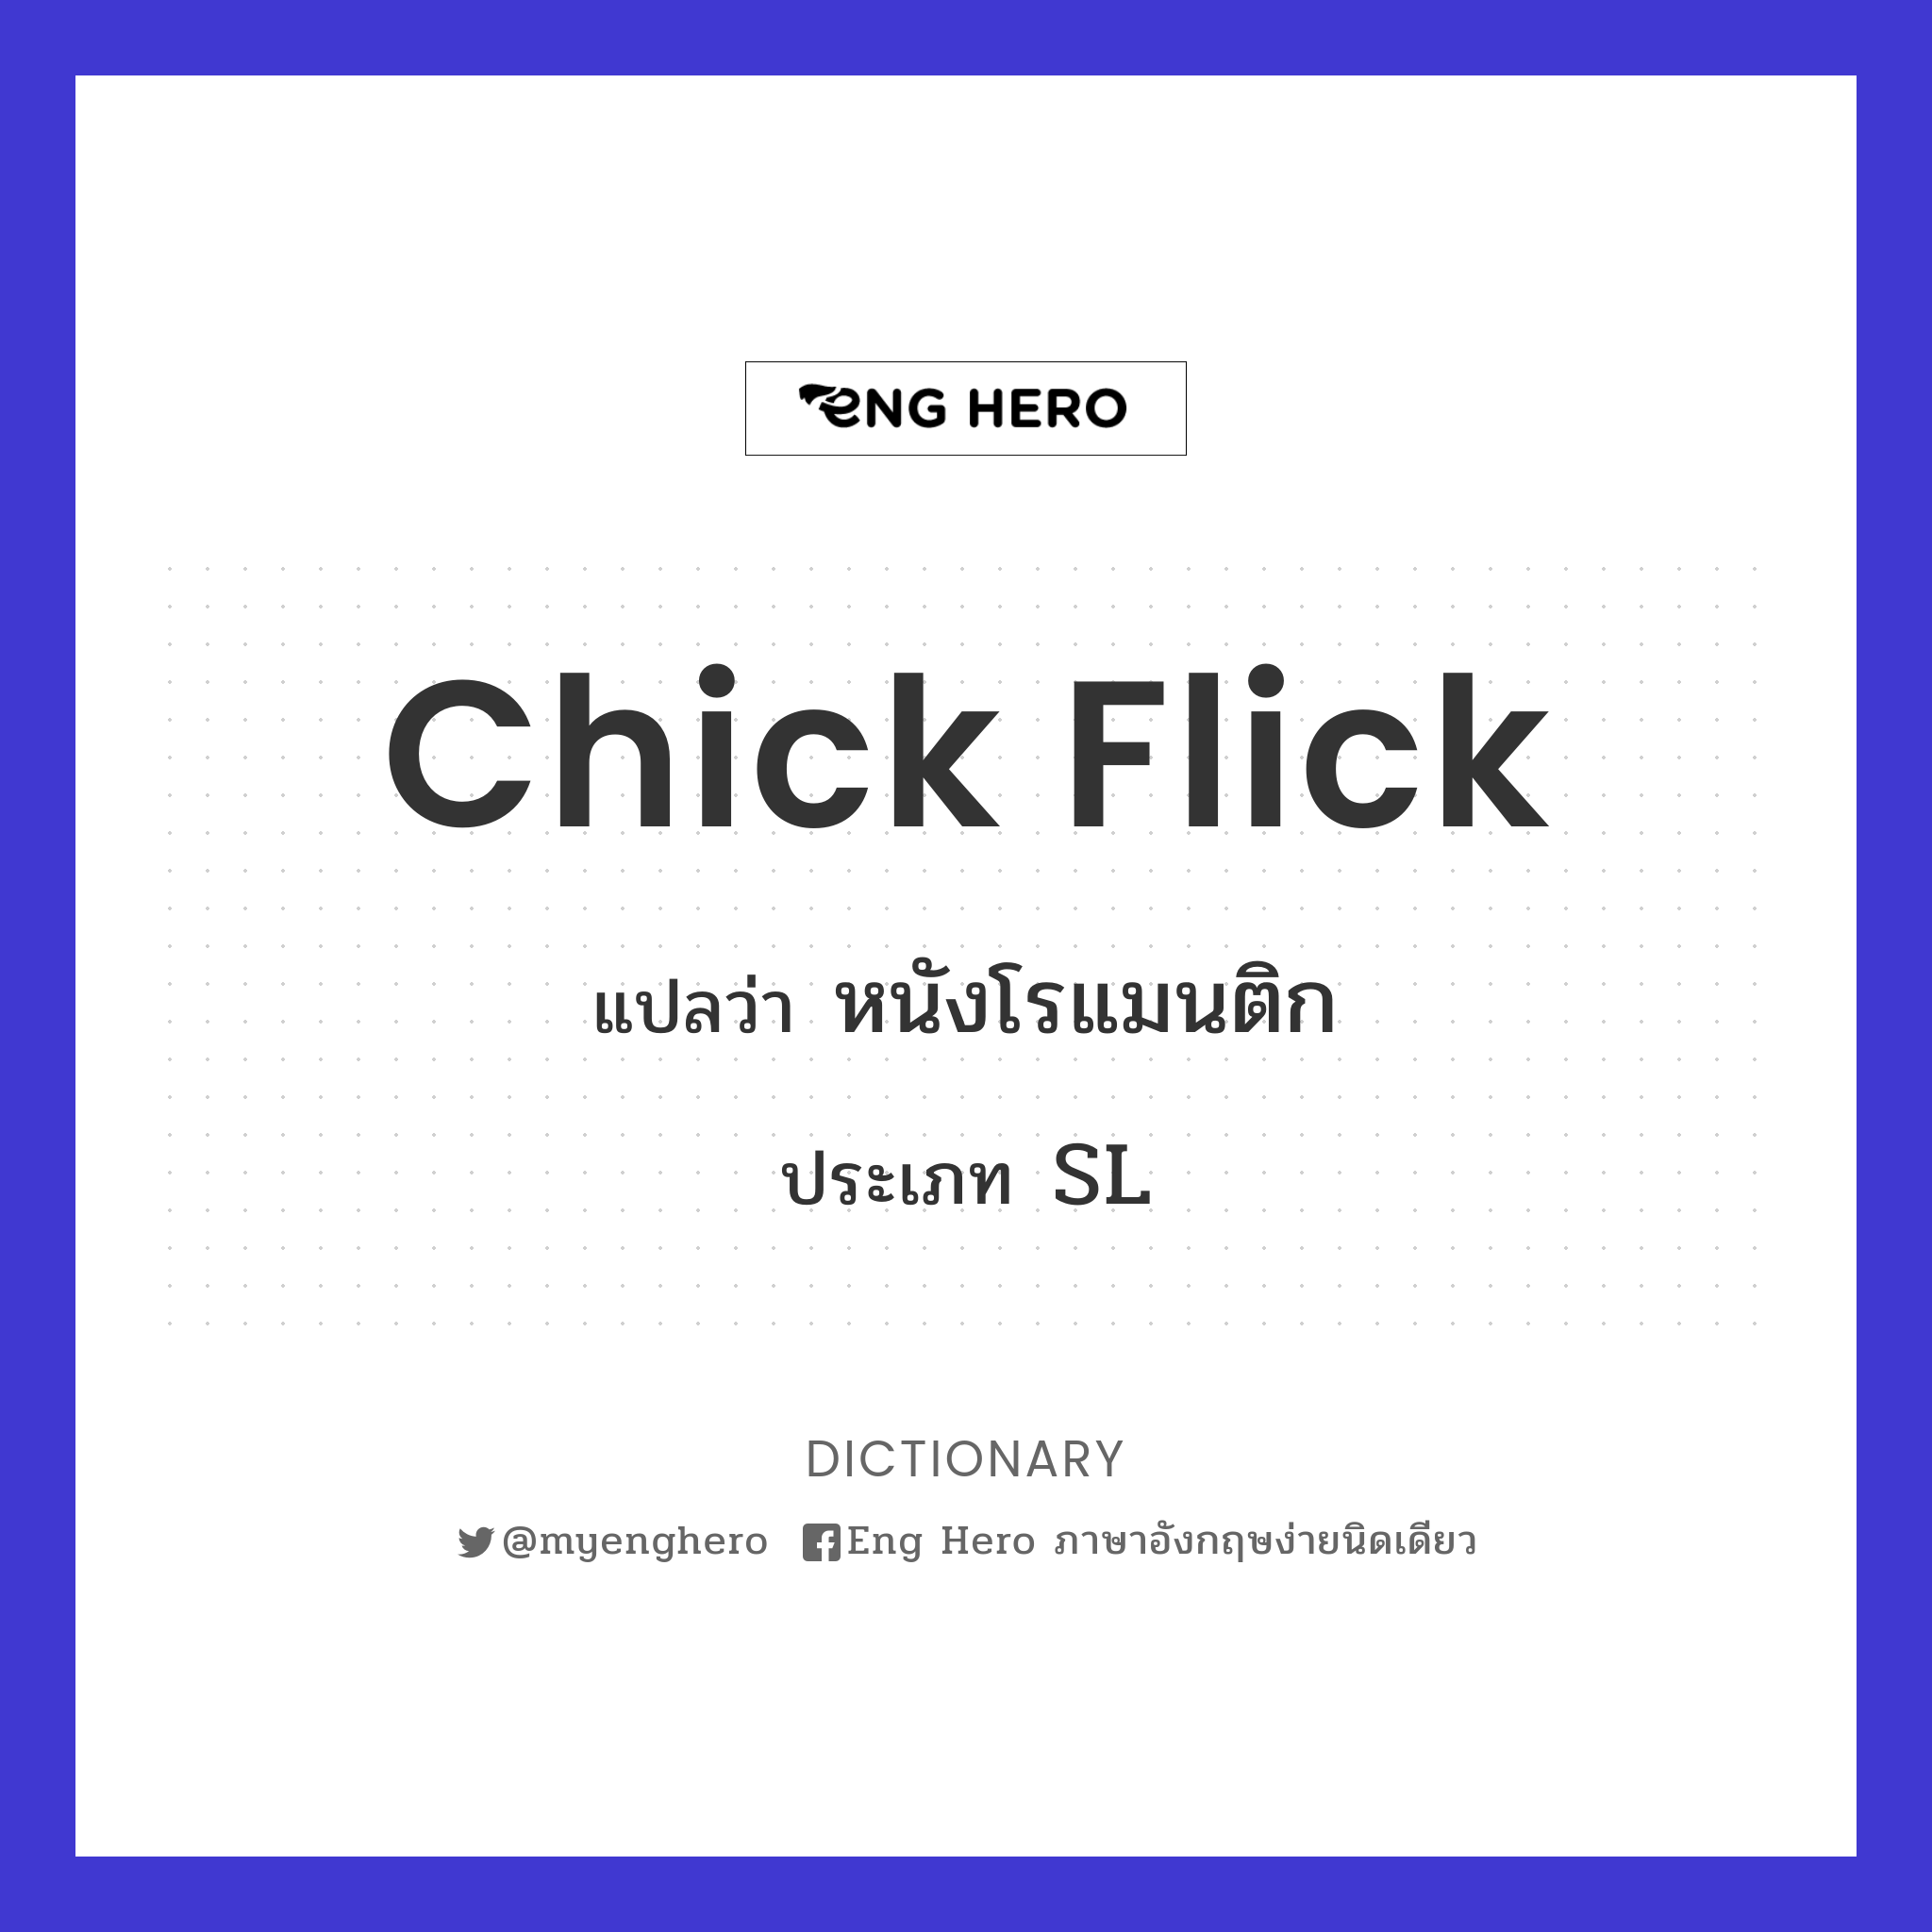 chick flick